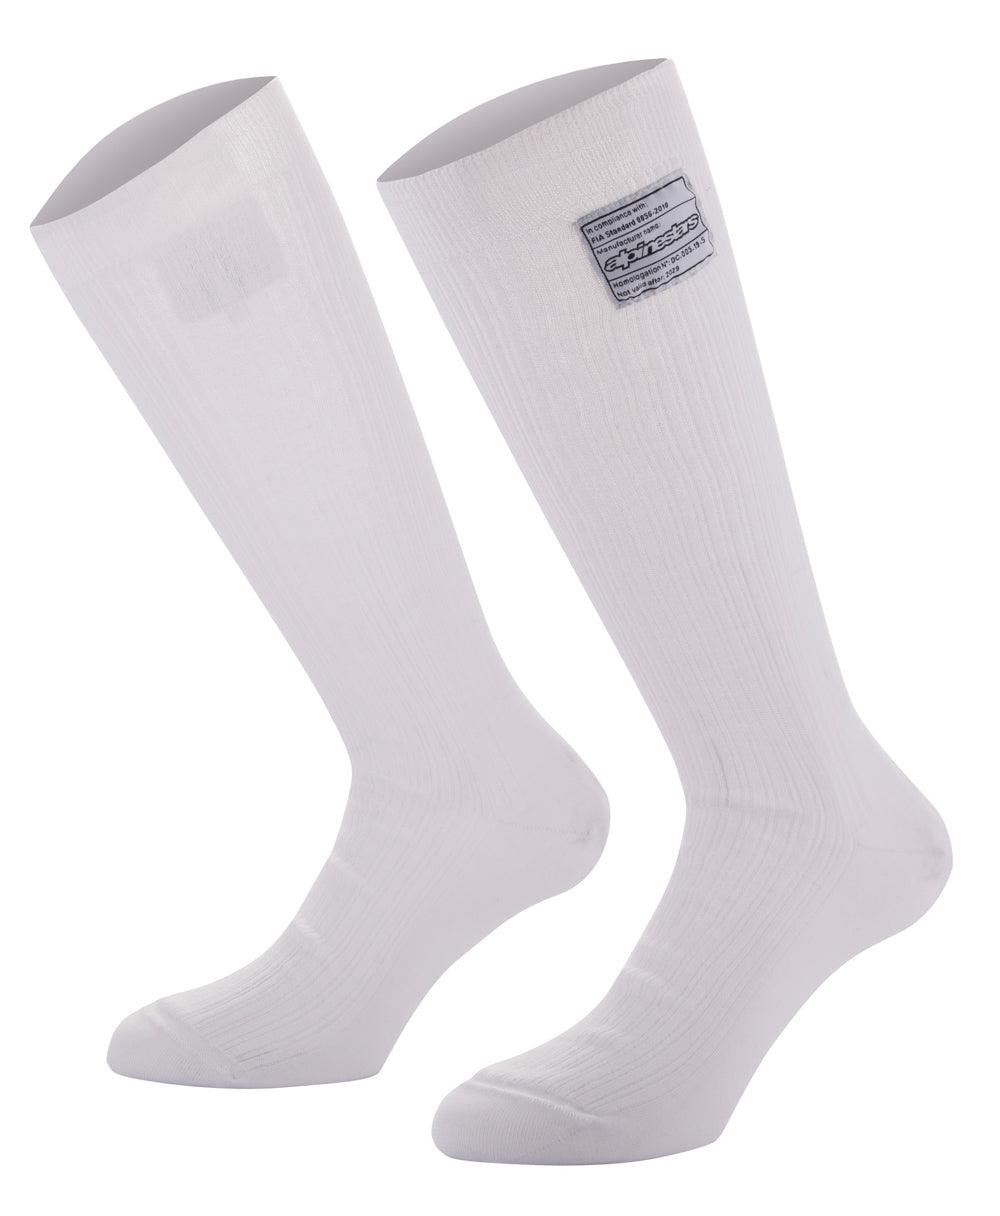 Socks Race V4 White Small - Burlile Performance Products